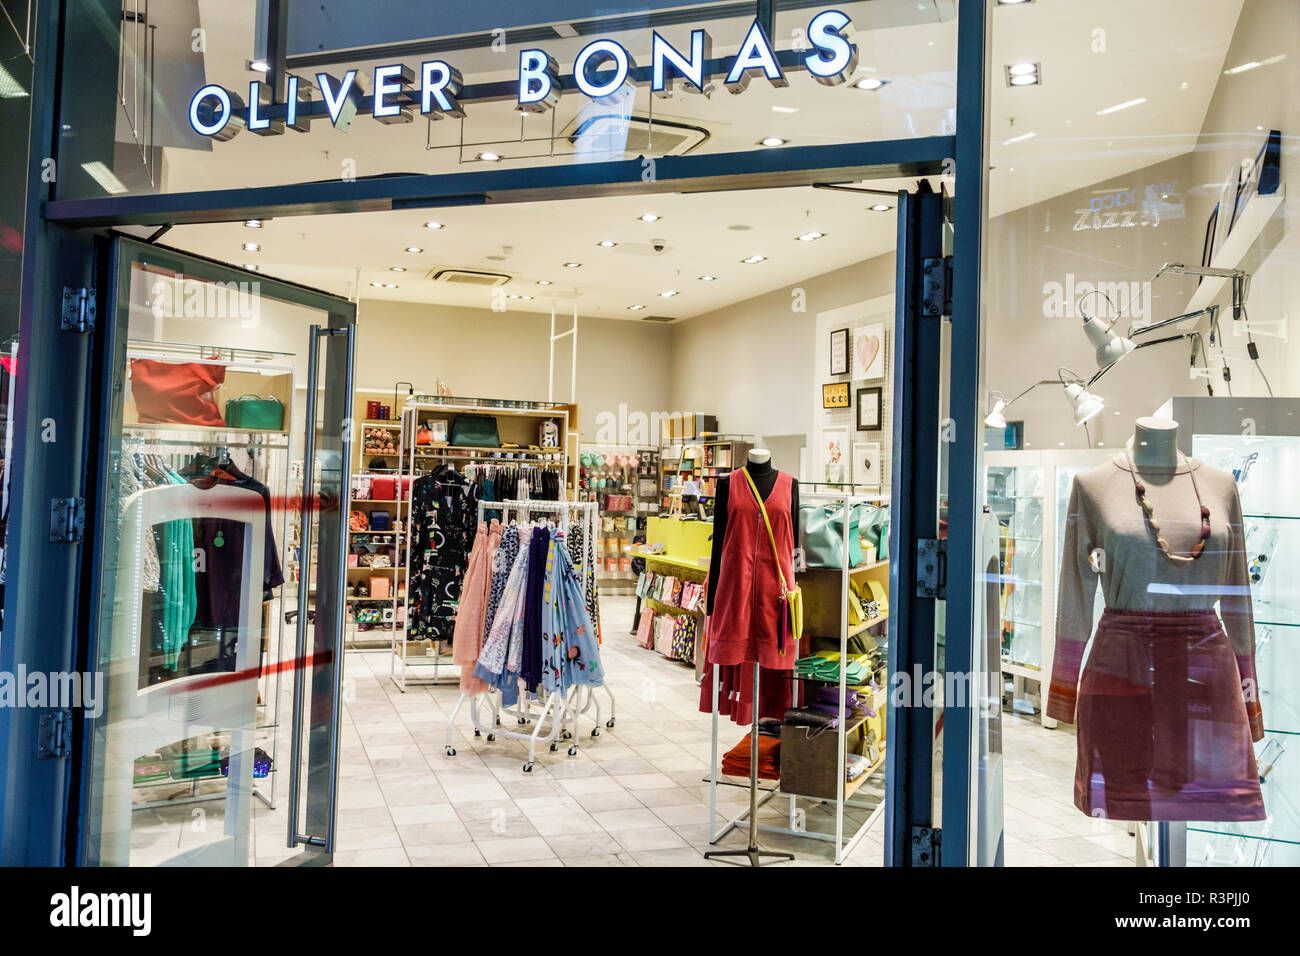 Oliver Bonas,fashion boutique,store ...